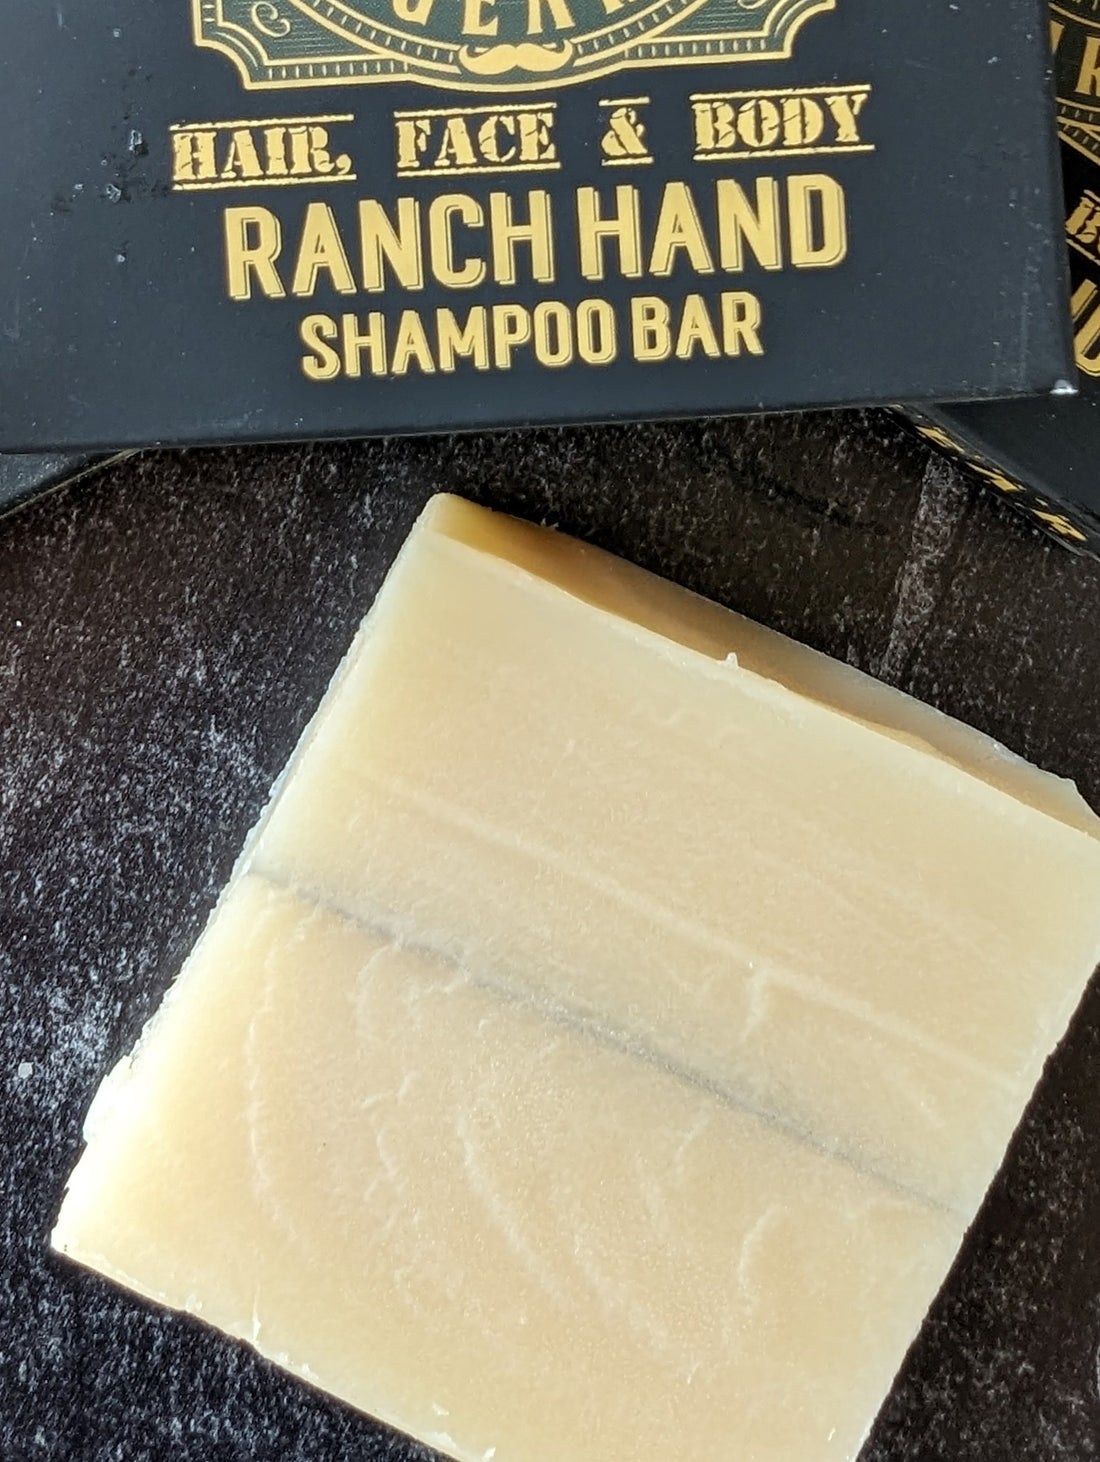 Ranch Hand All-In-One Hair, Face & Body Shampoo Bar